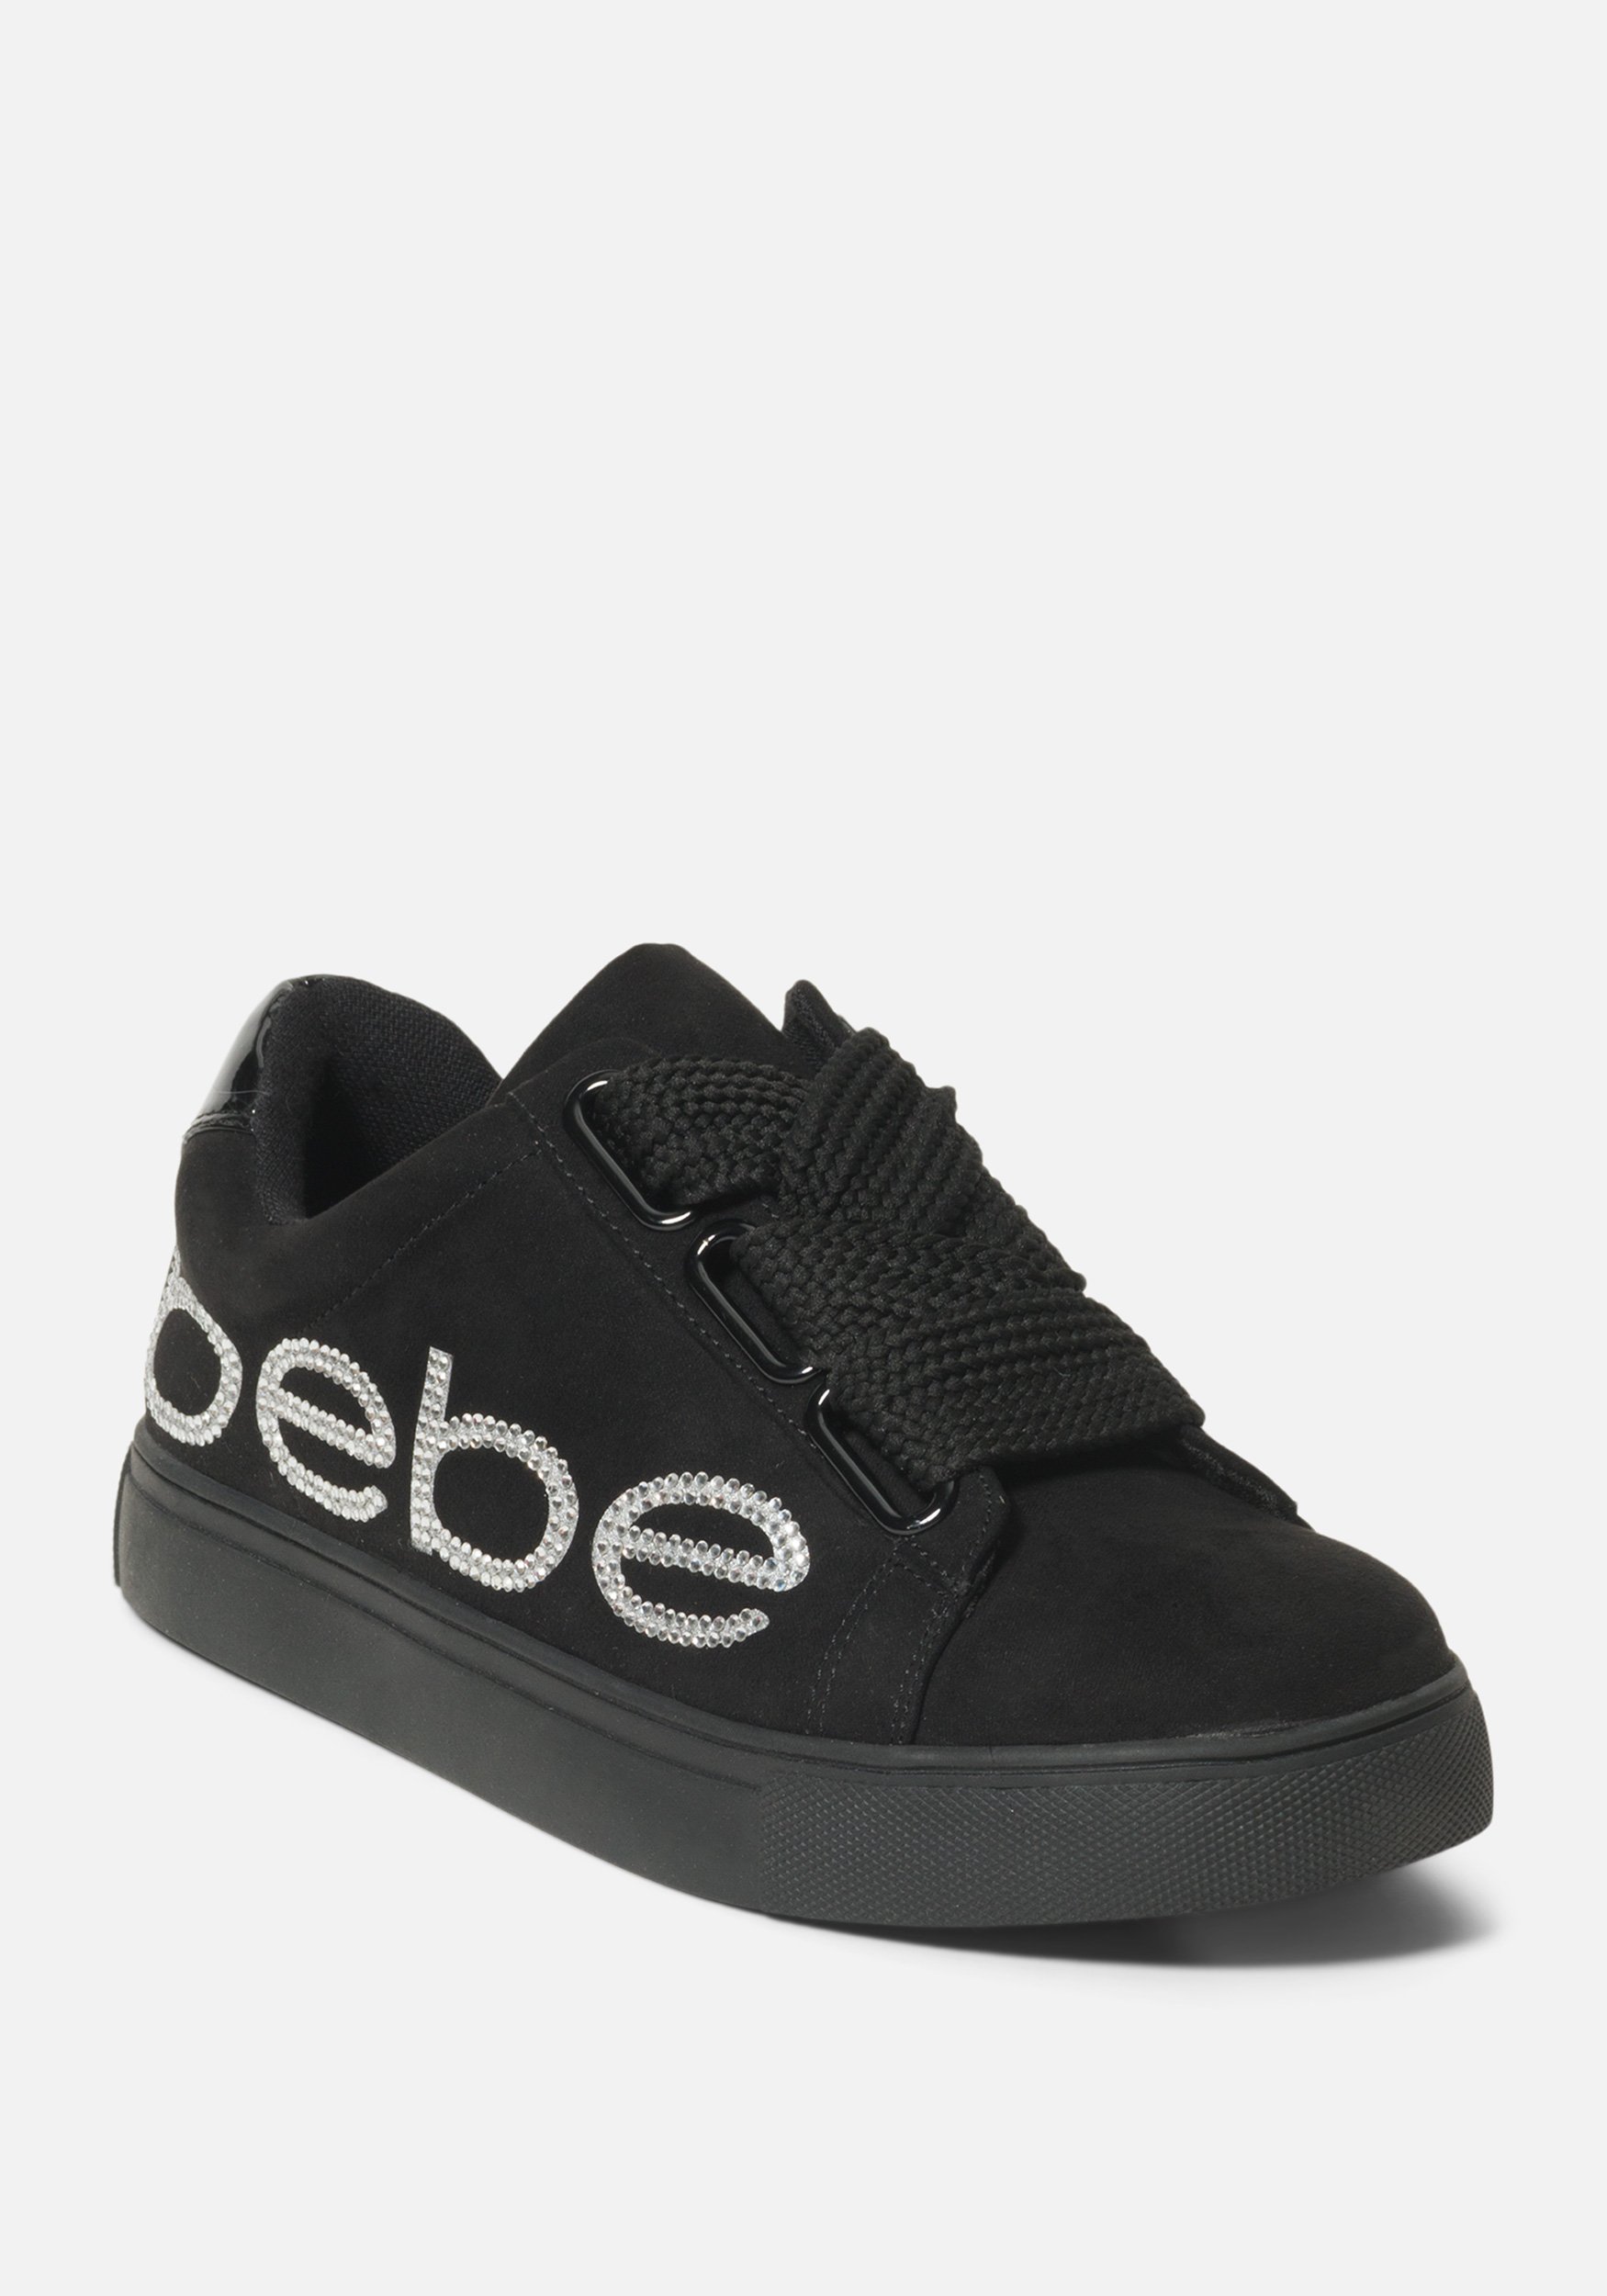 Women's Cabree Bebe Logo Sneakers, Size 11 in Black Synthetic